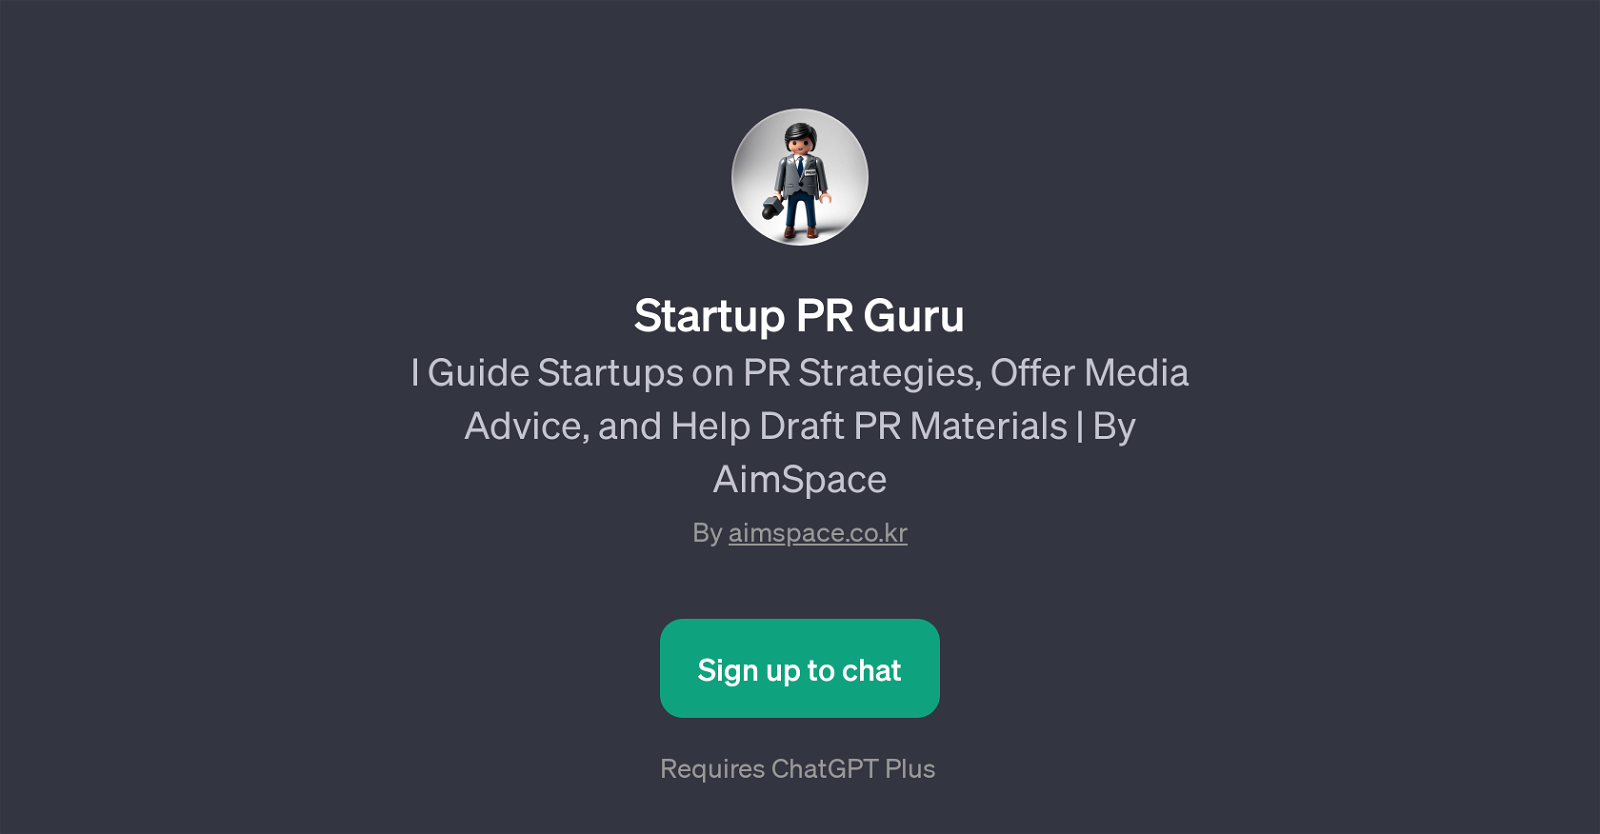 Startup PR Guru website